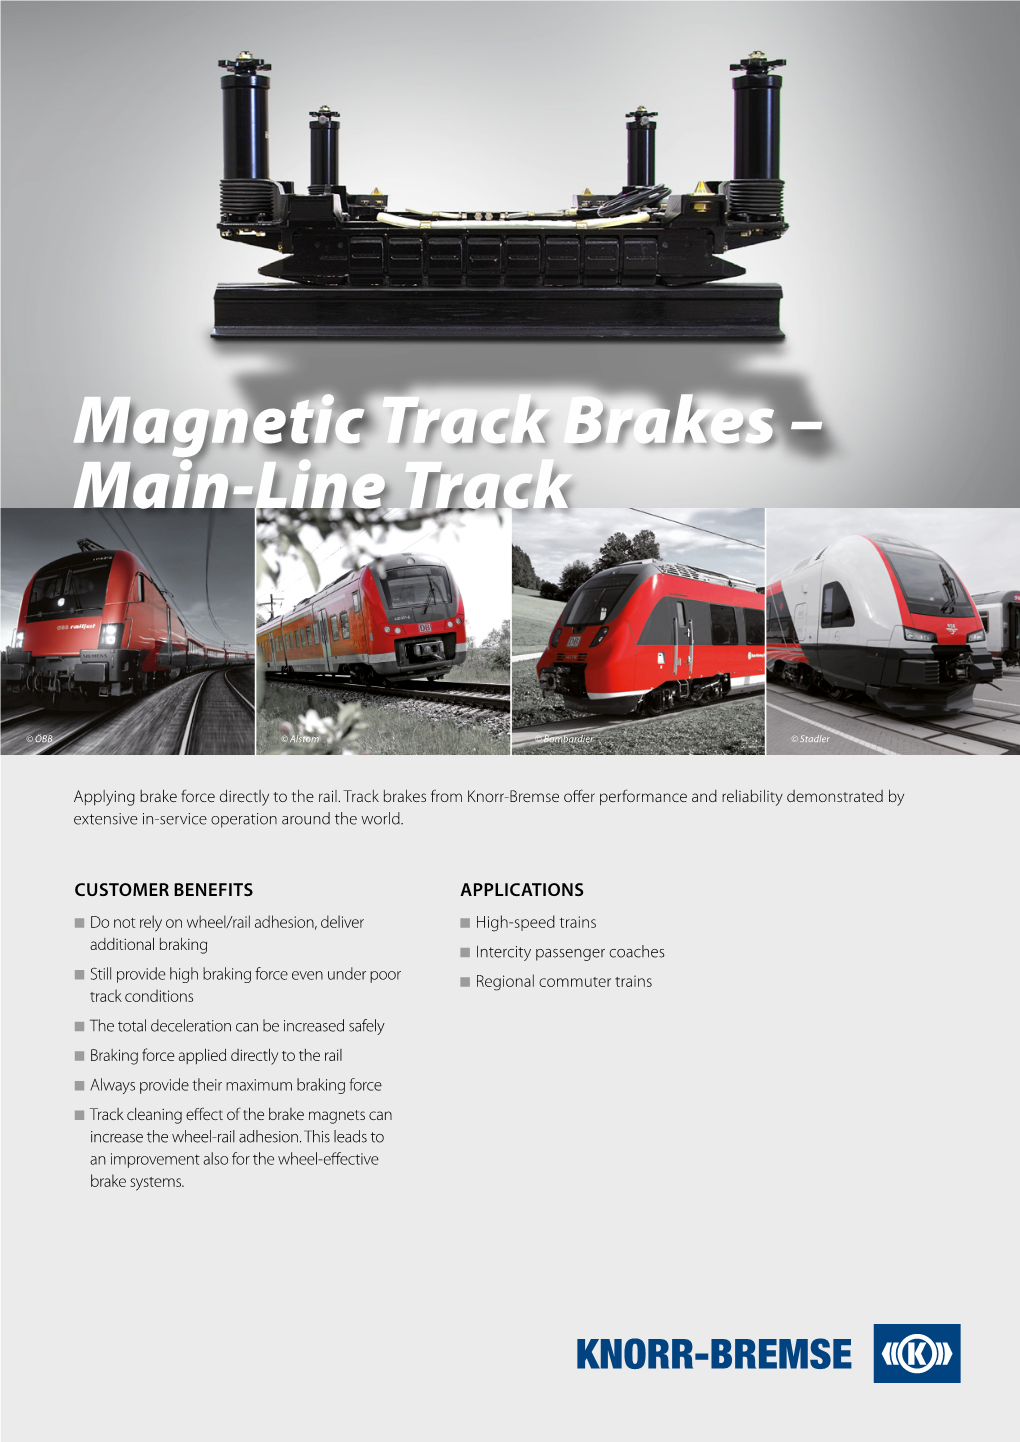 Magnetic Track Brakes – Main-Line Track